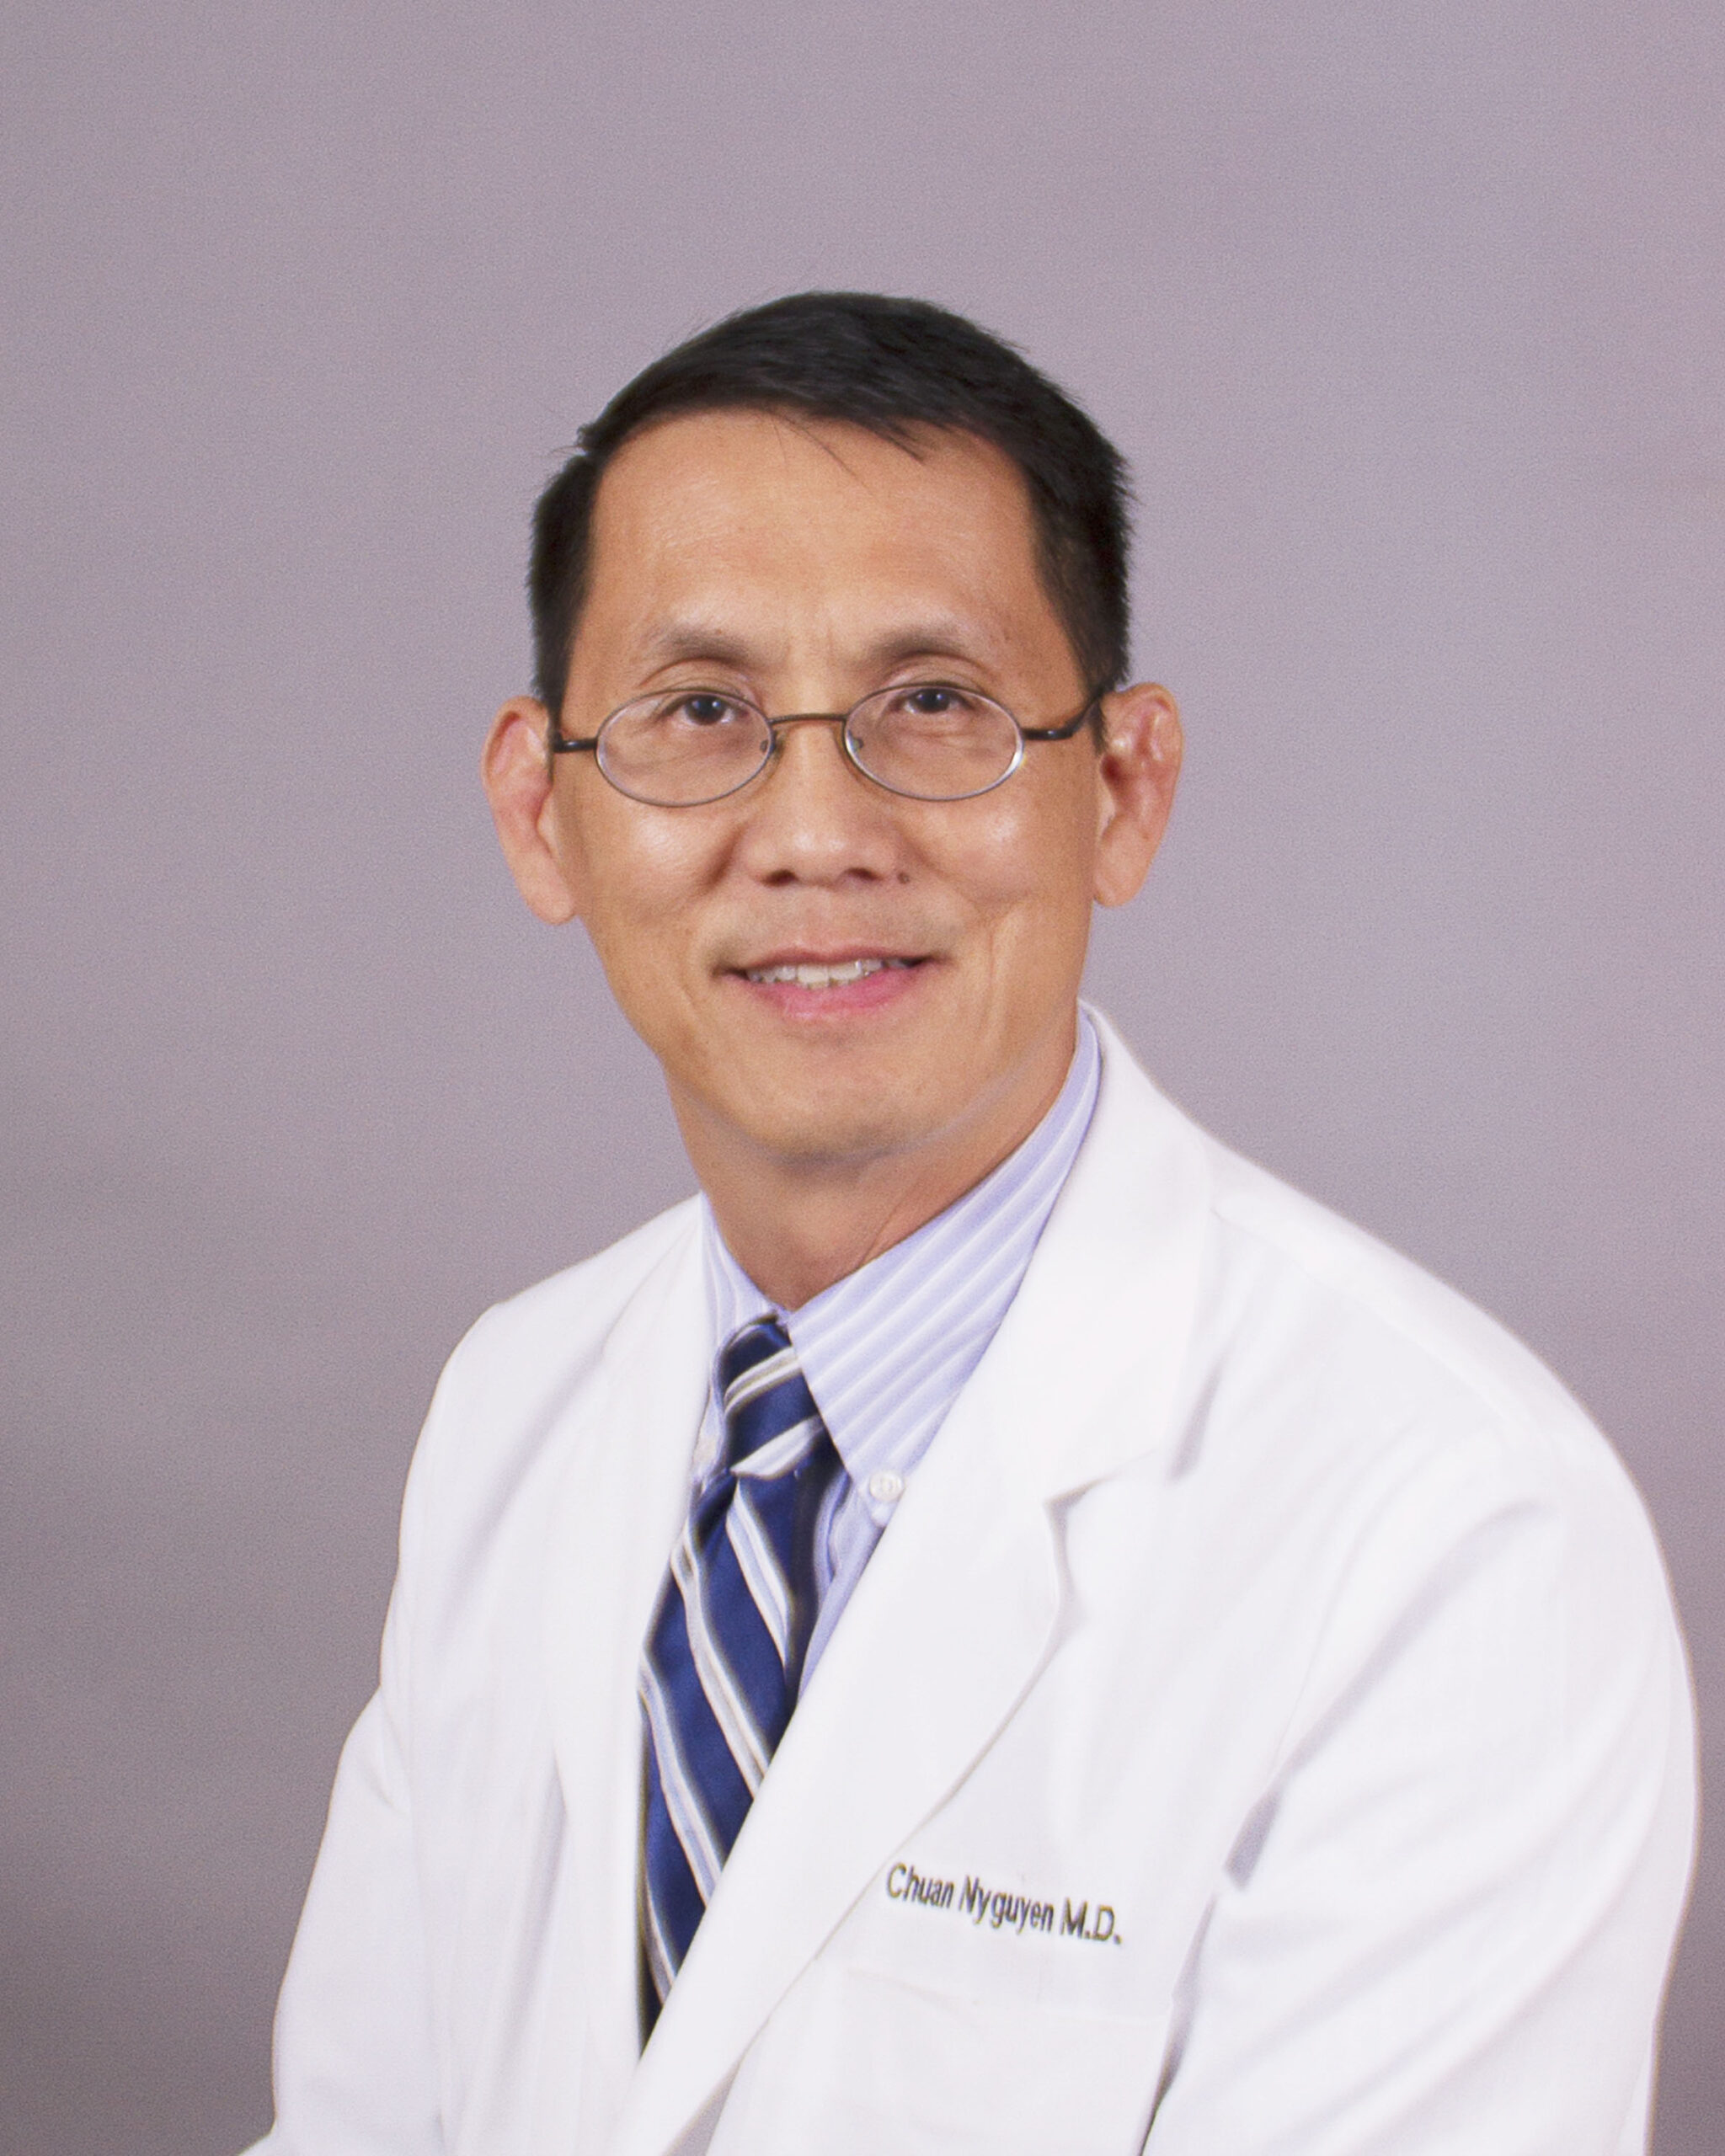 Chuan M. Nguyen, M.D.